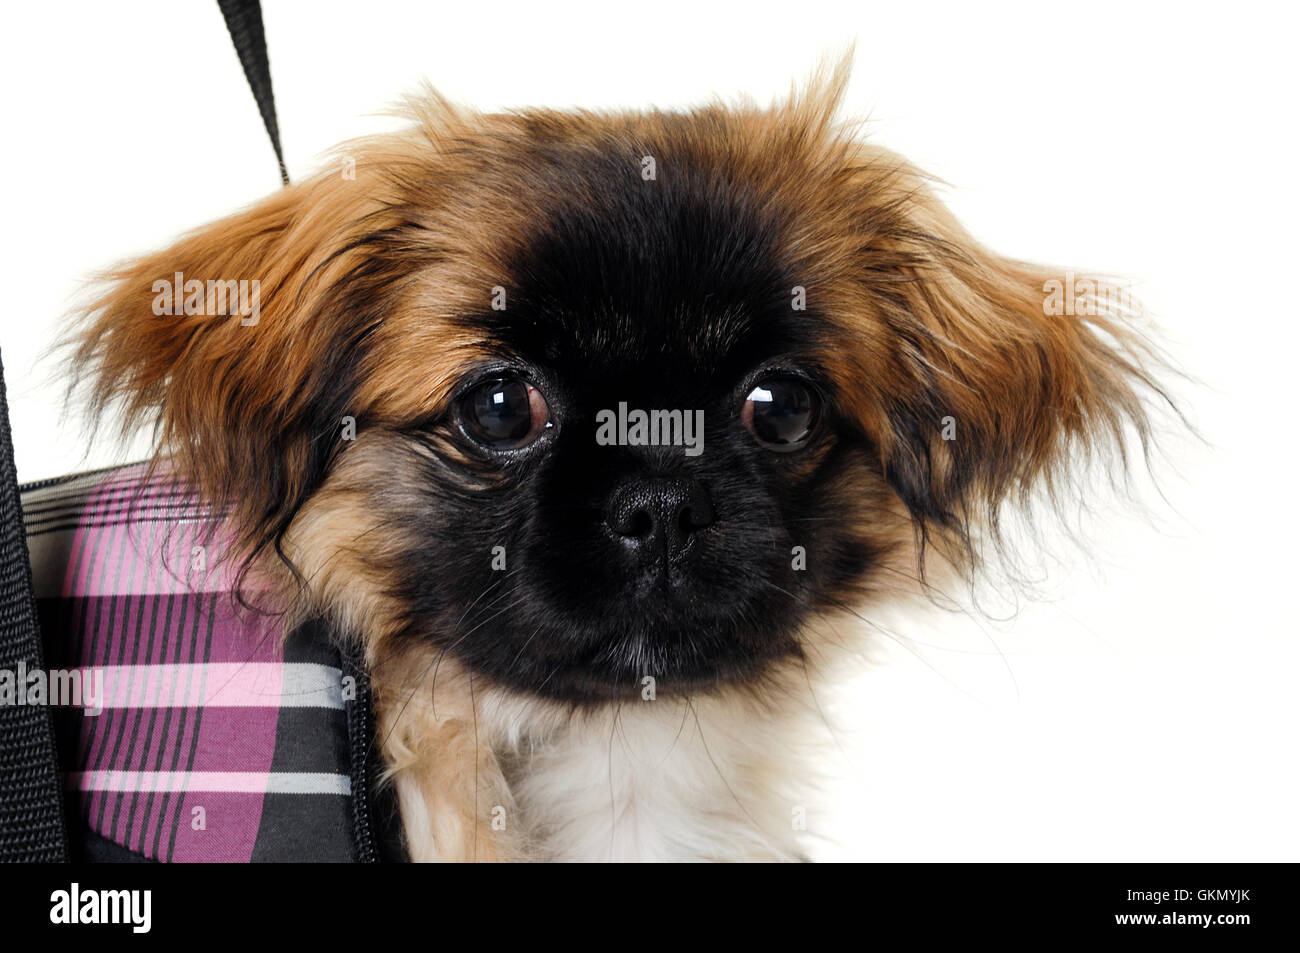 Pekingese Chihuahua Stockfotos und -bilder Kaufen - Alamy